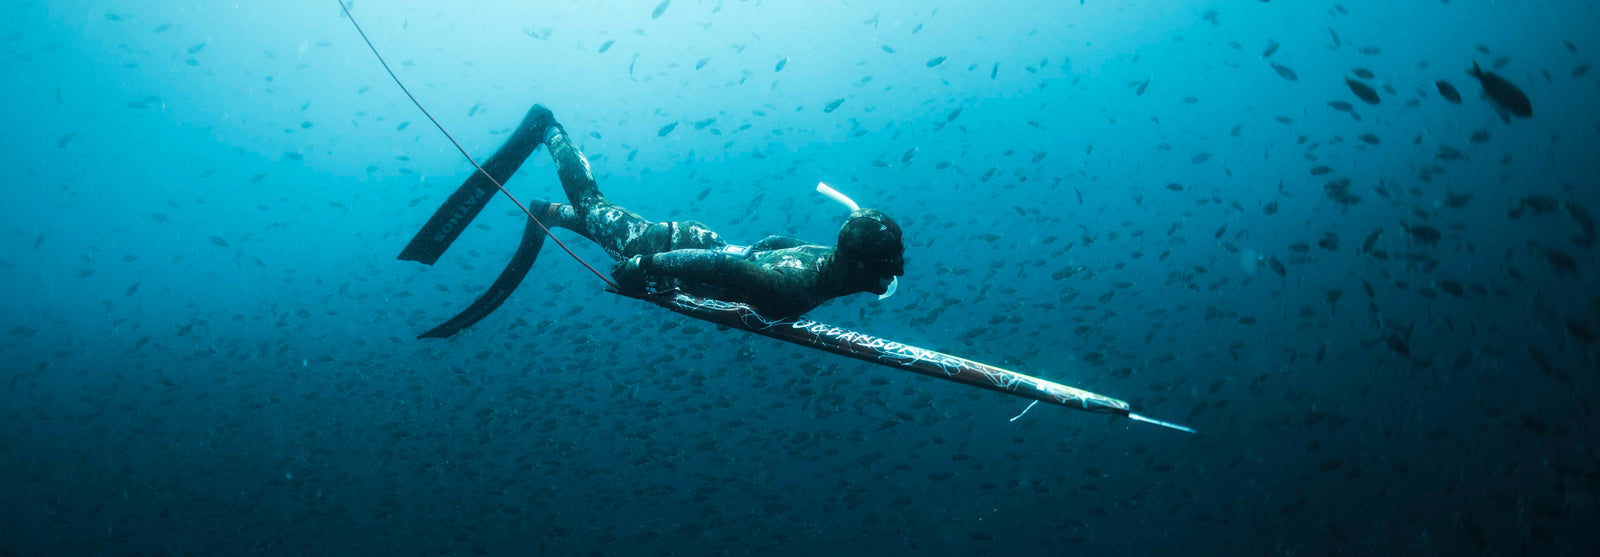 Spearfishing & Freediving Gear - Spear America